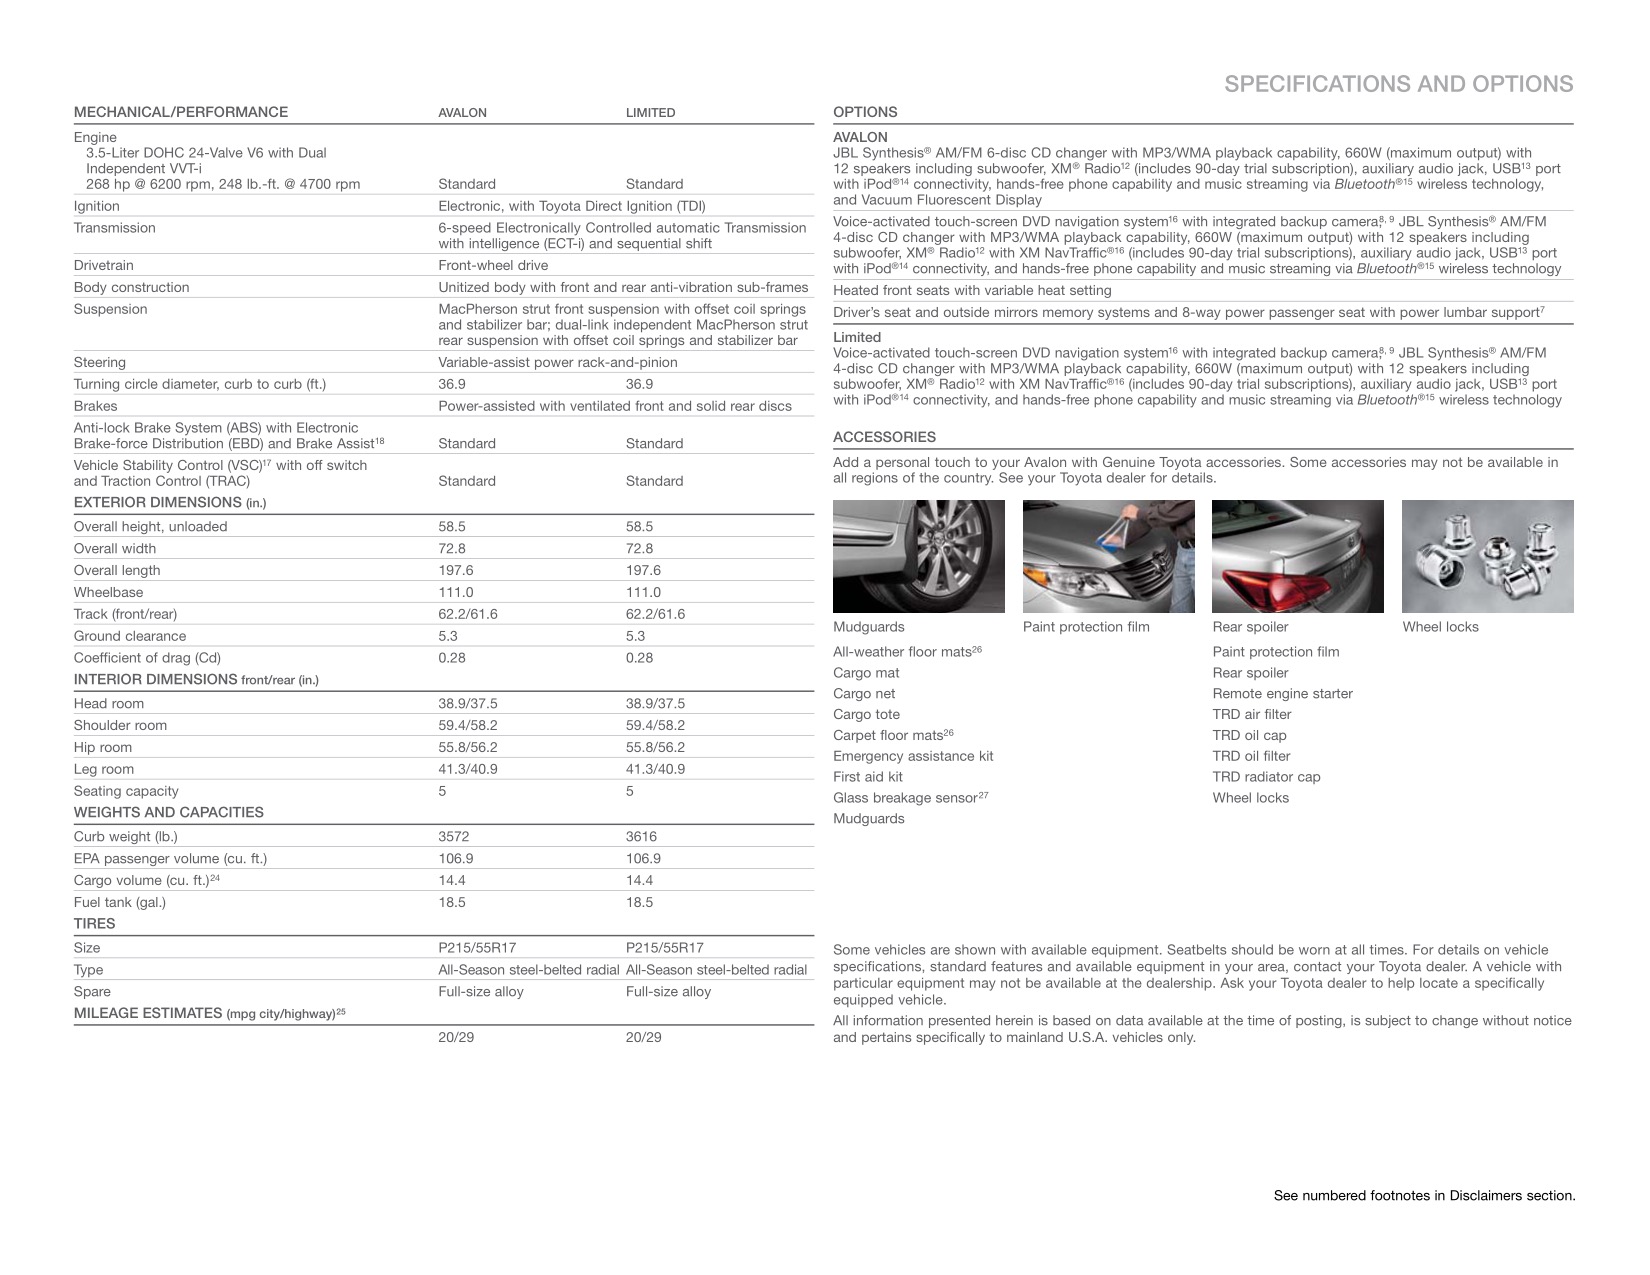 2011 Toyota Avalon Brochure Page 10